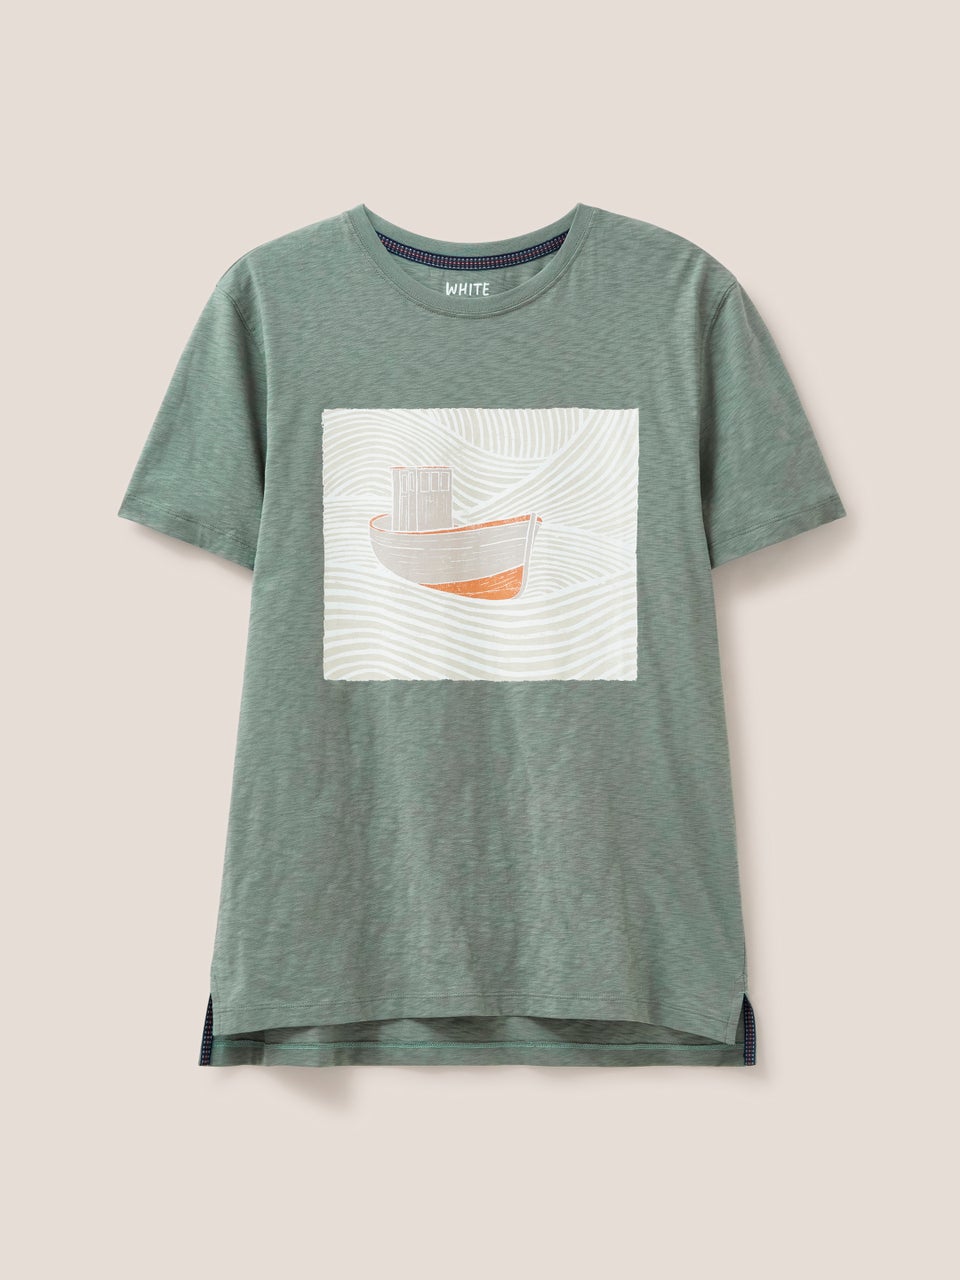 Trawler T-Shirt mit Schiffsmotiv